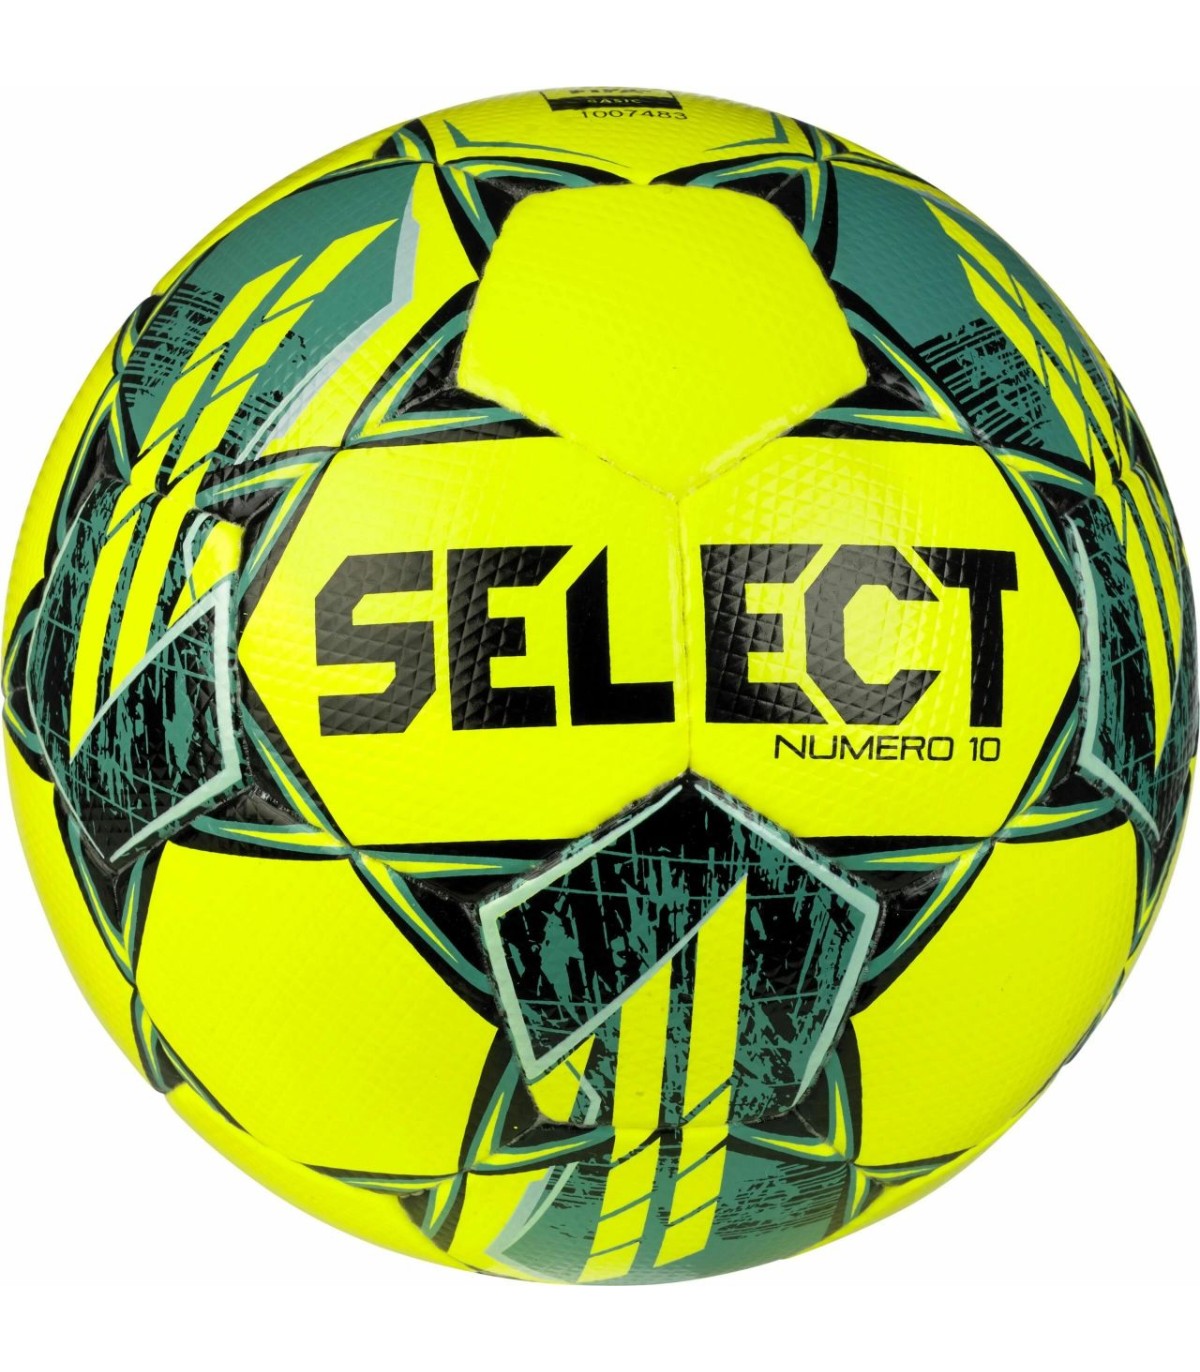 Ballon Select Numero 10 jaune